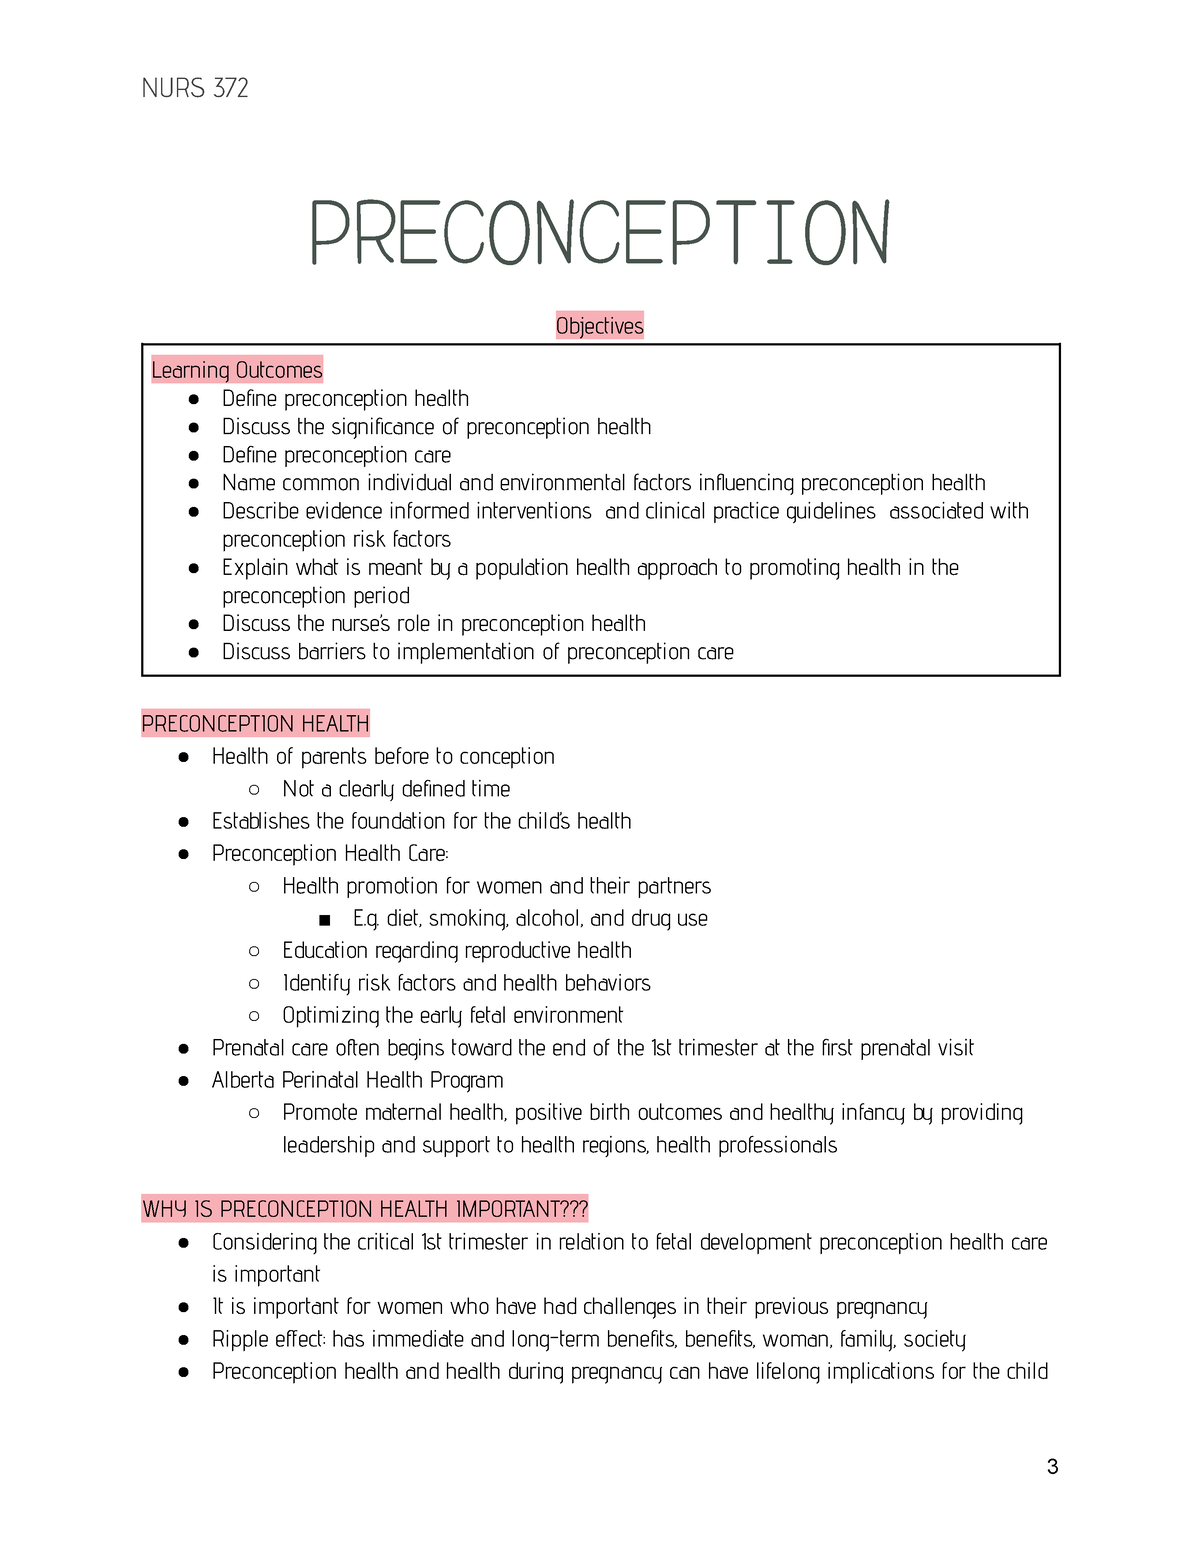 preconception notion definition